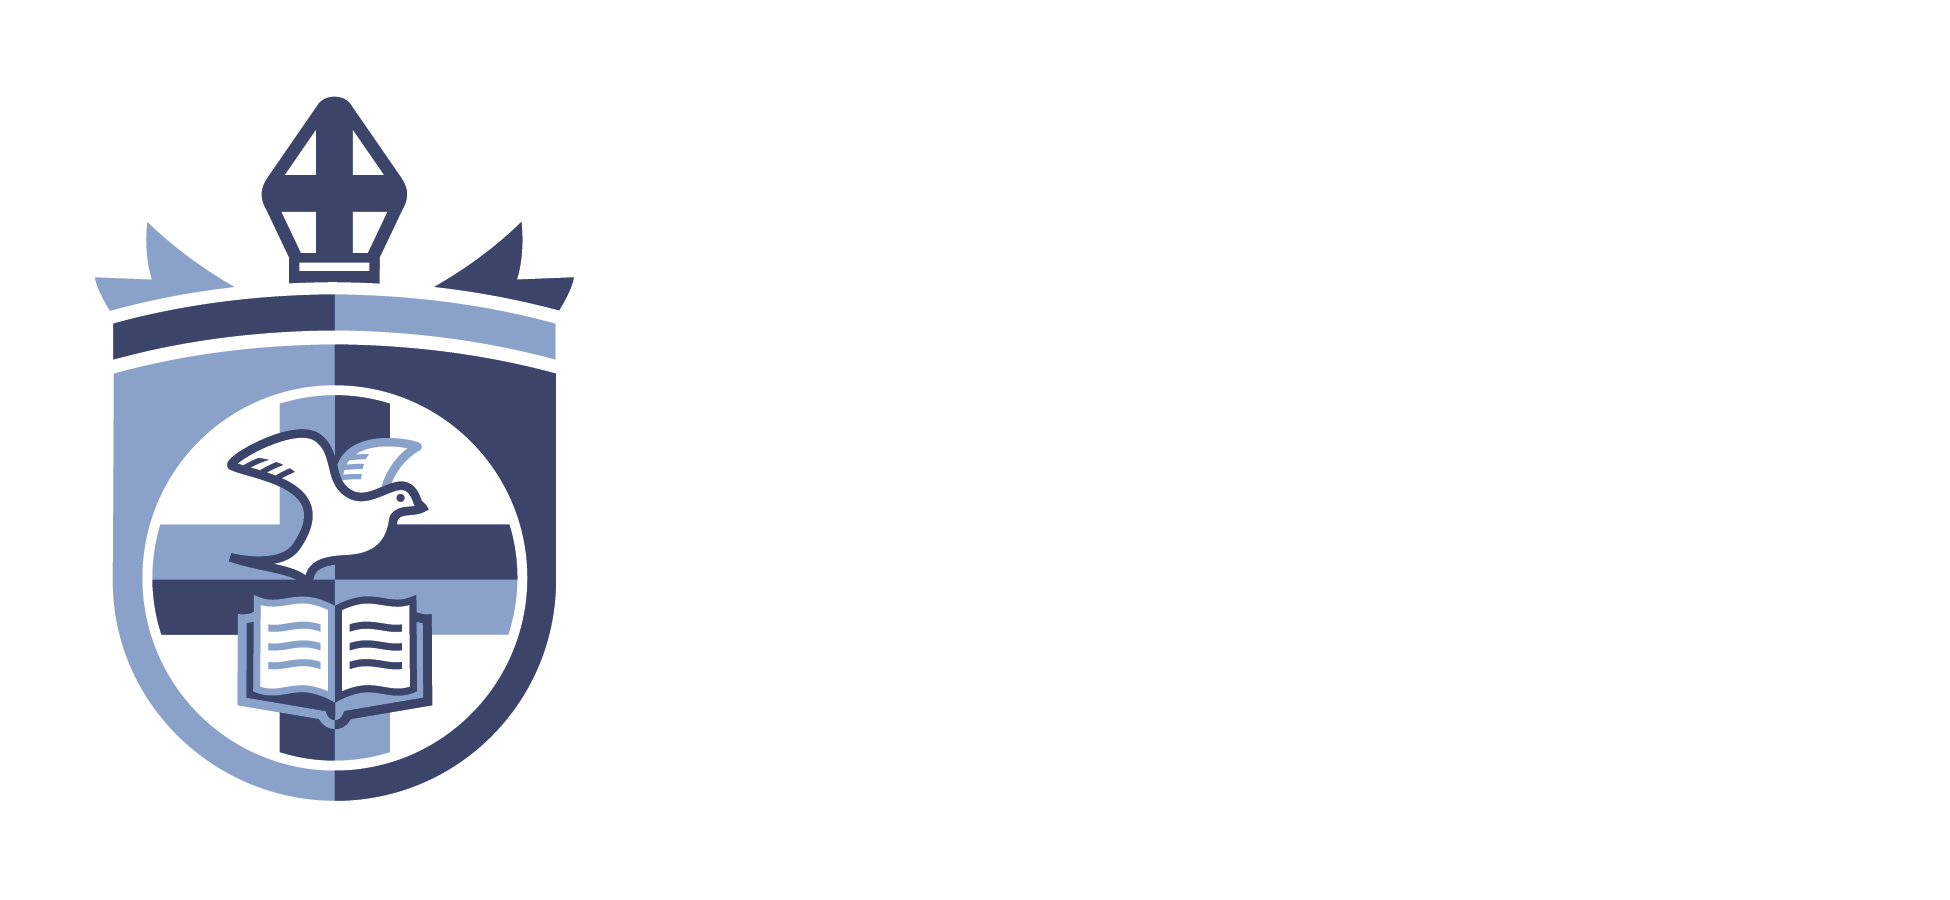 All Saints' College Portfolios